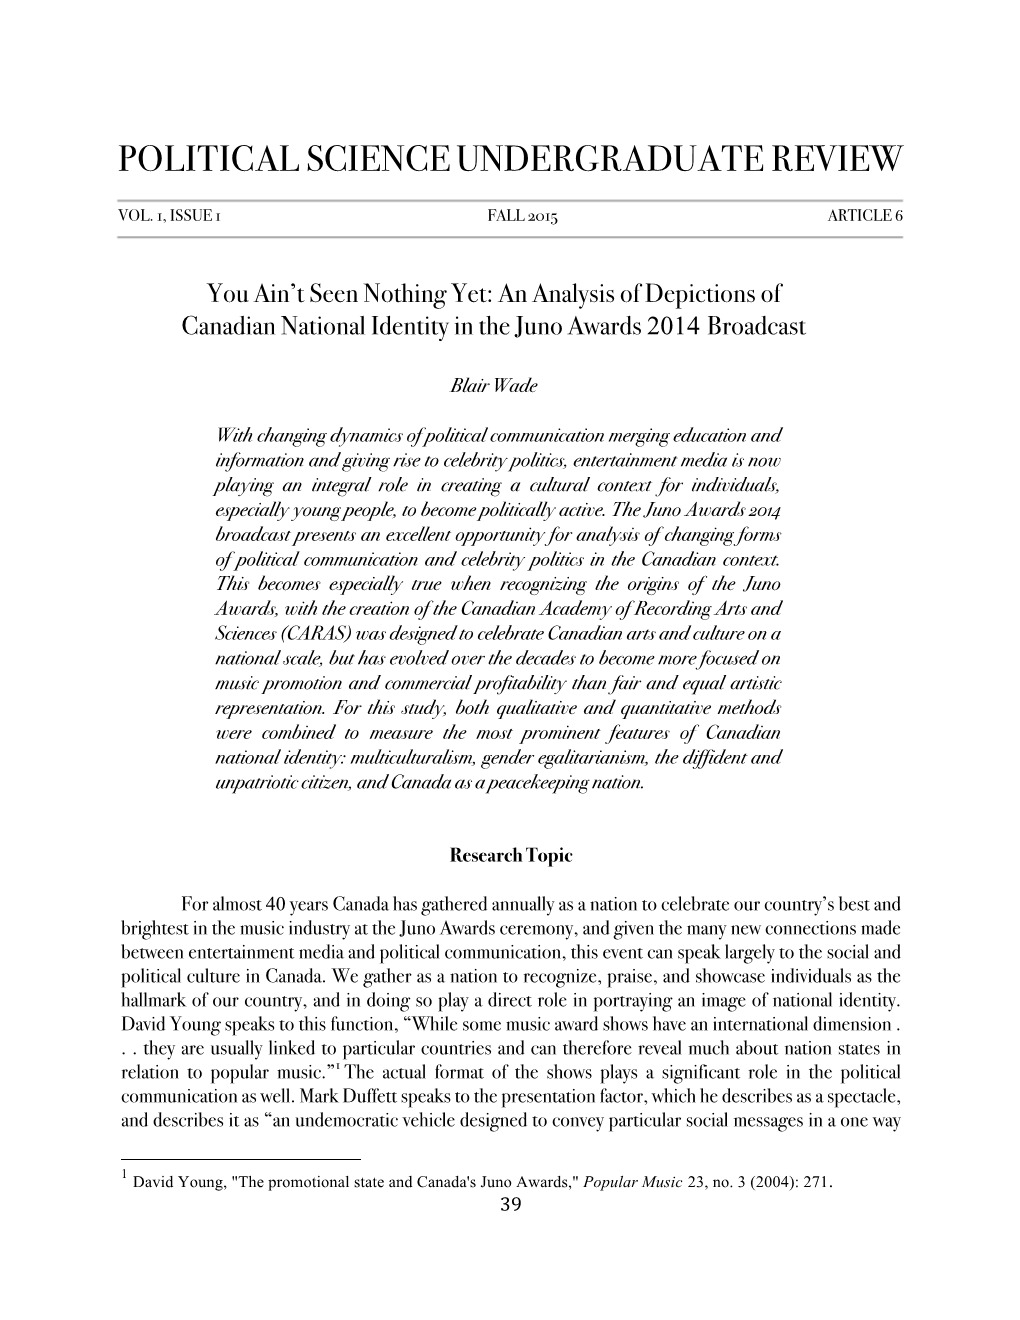 Political Science Undergraduate Review